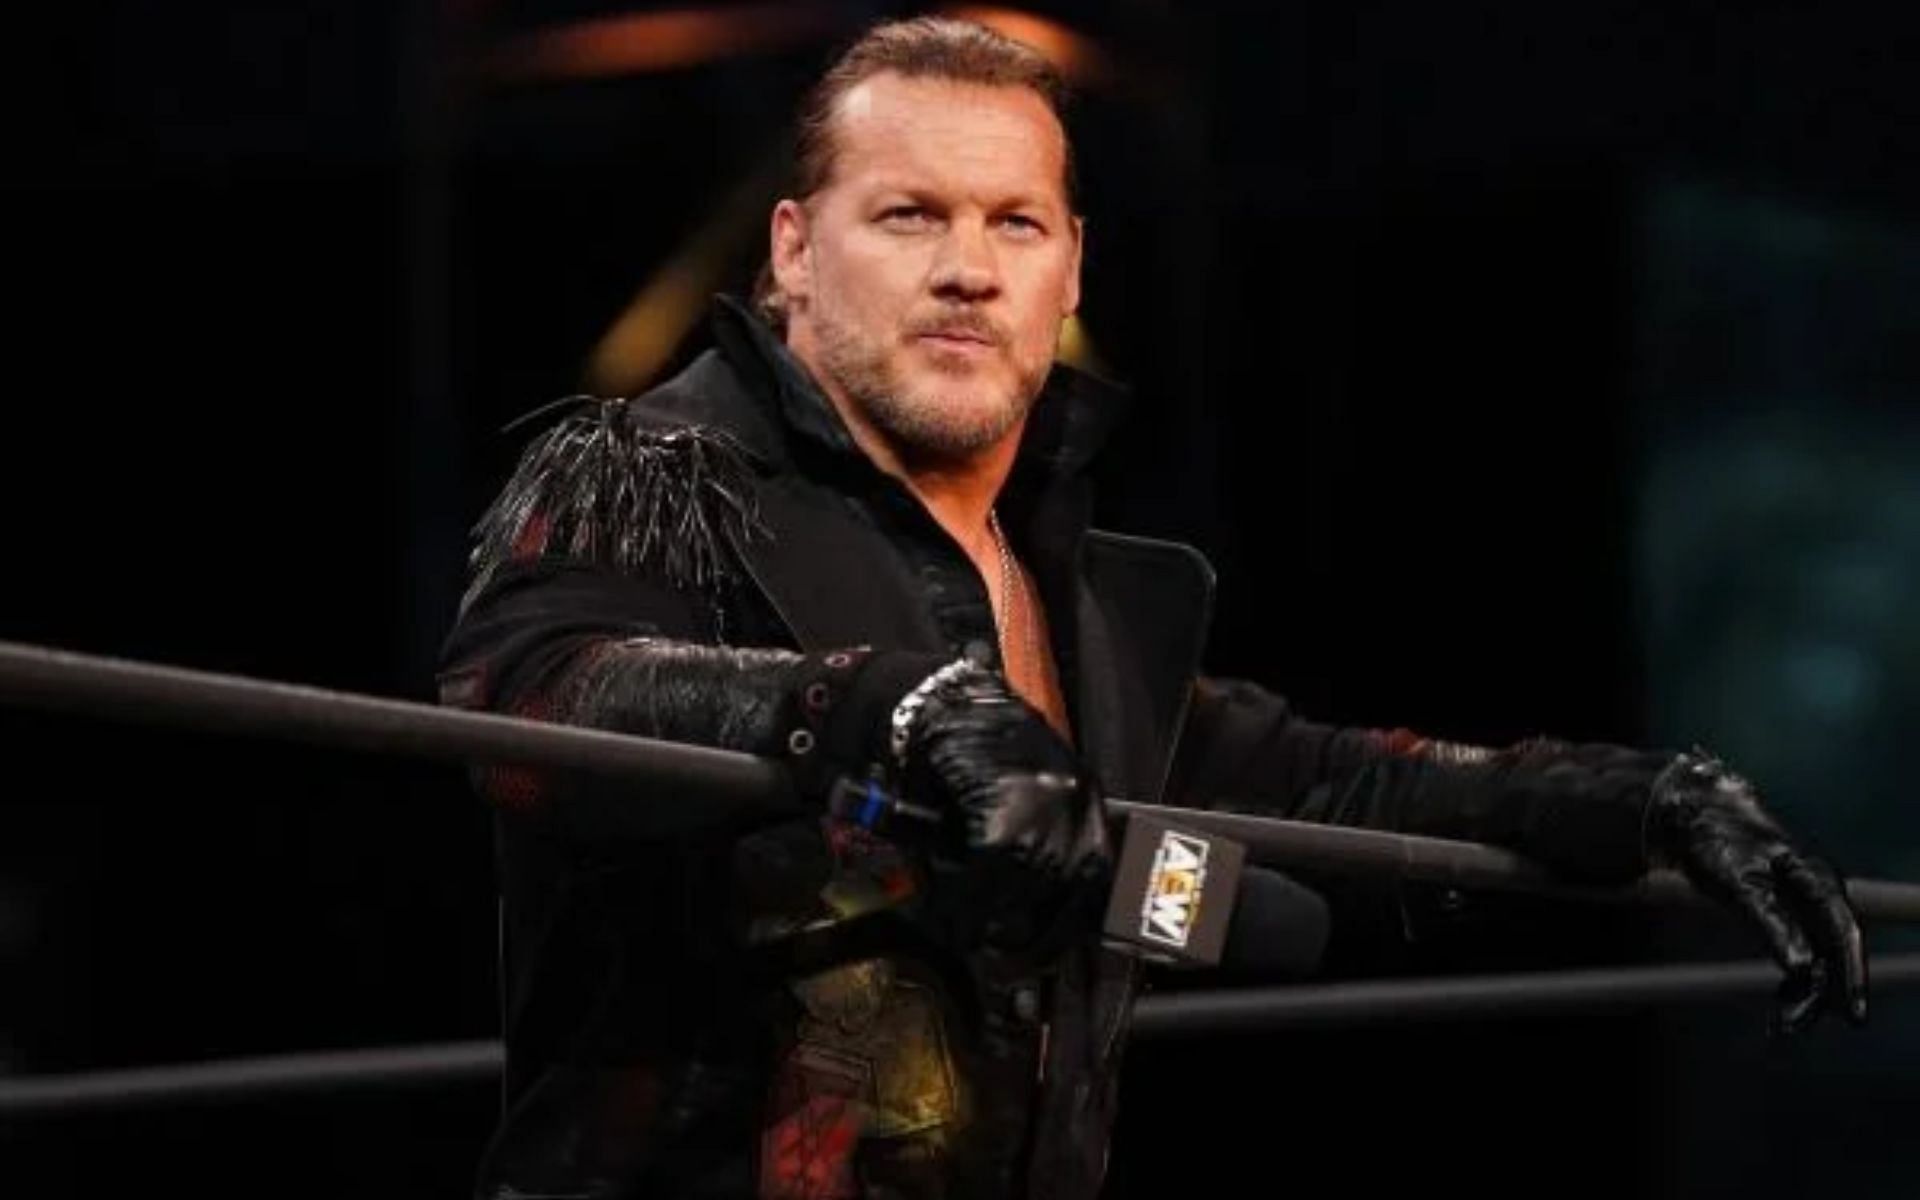 Chris Jericho is a multi-time world champion